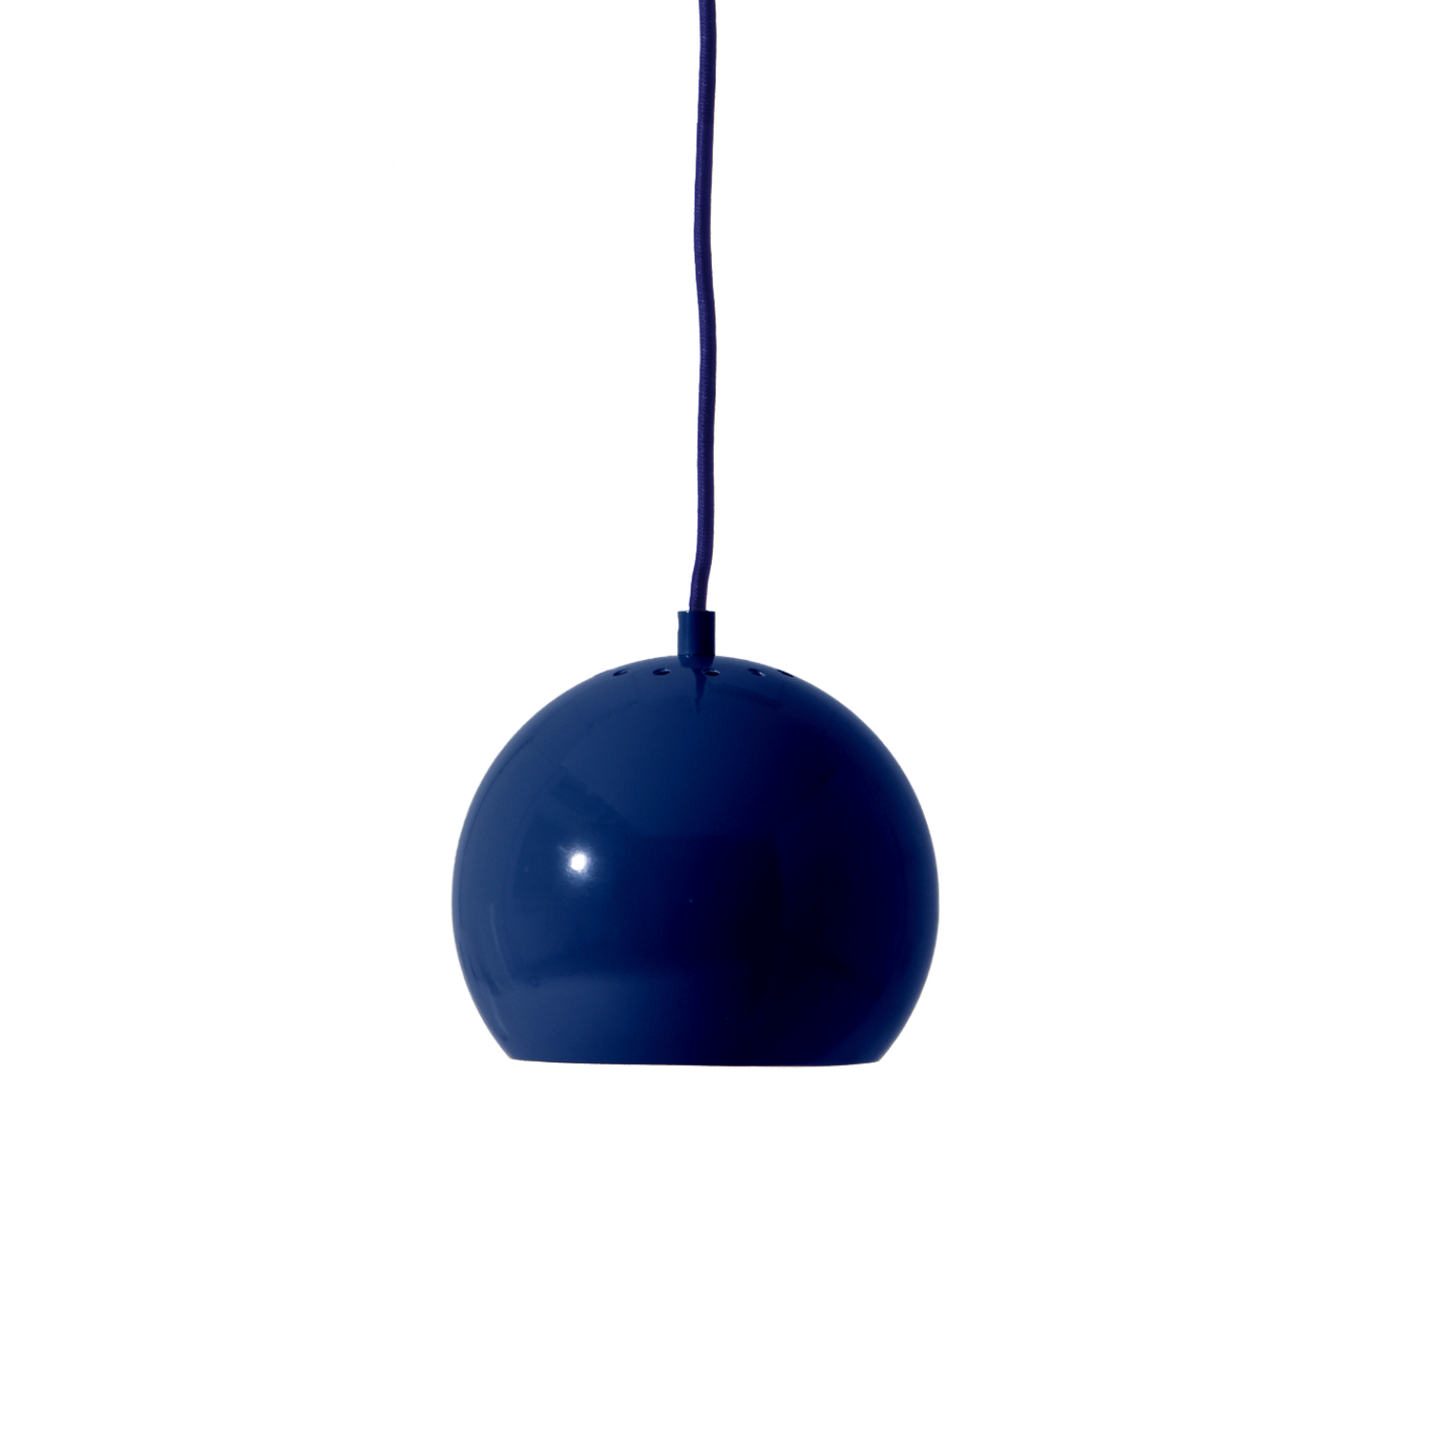 FRANDSEN Ball pendel - Blazed Blue - Limited edition